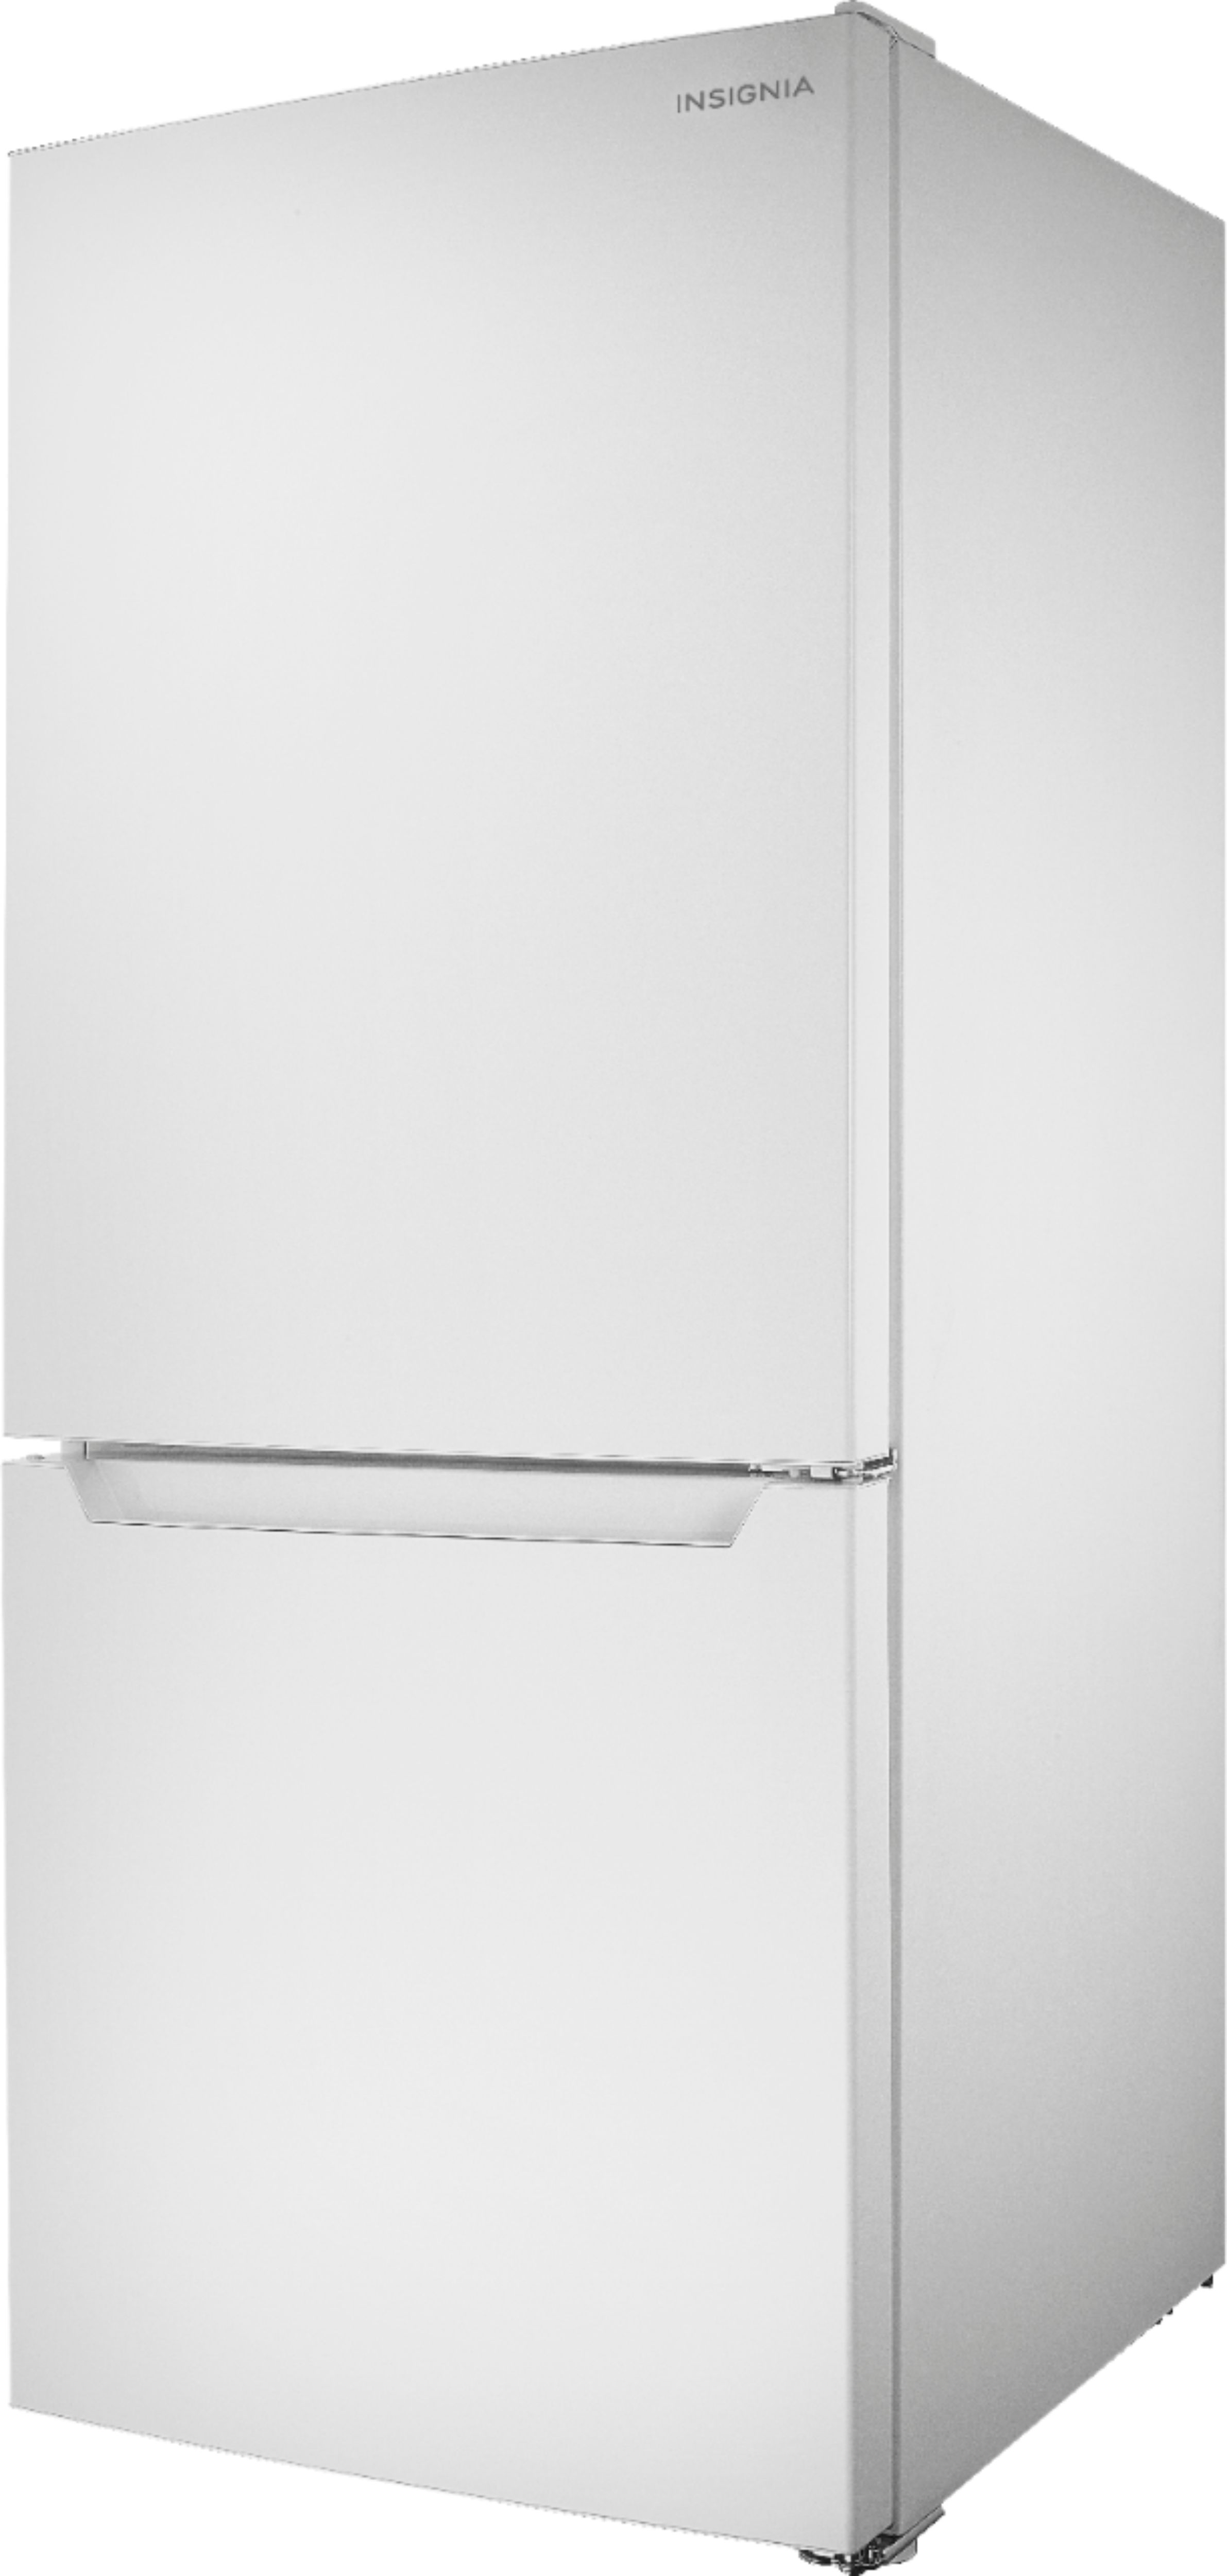 Left View: GE - 21.0 Cu. Ft. Bottom-Freezer Refrigerator - High Gloss Black